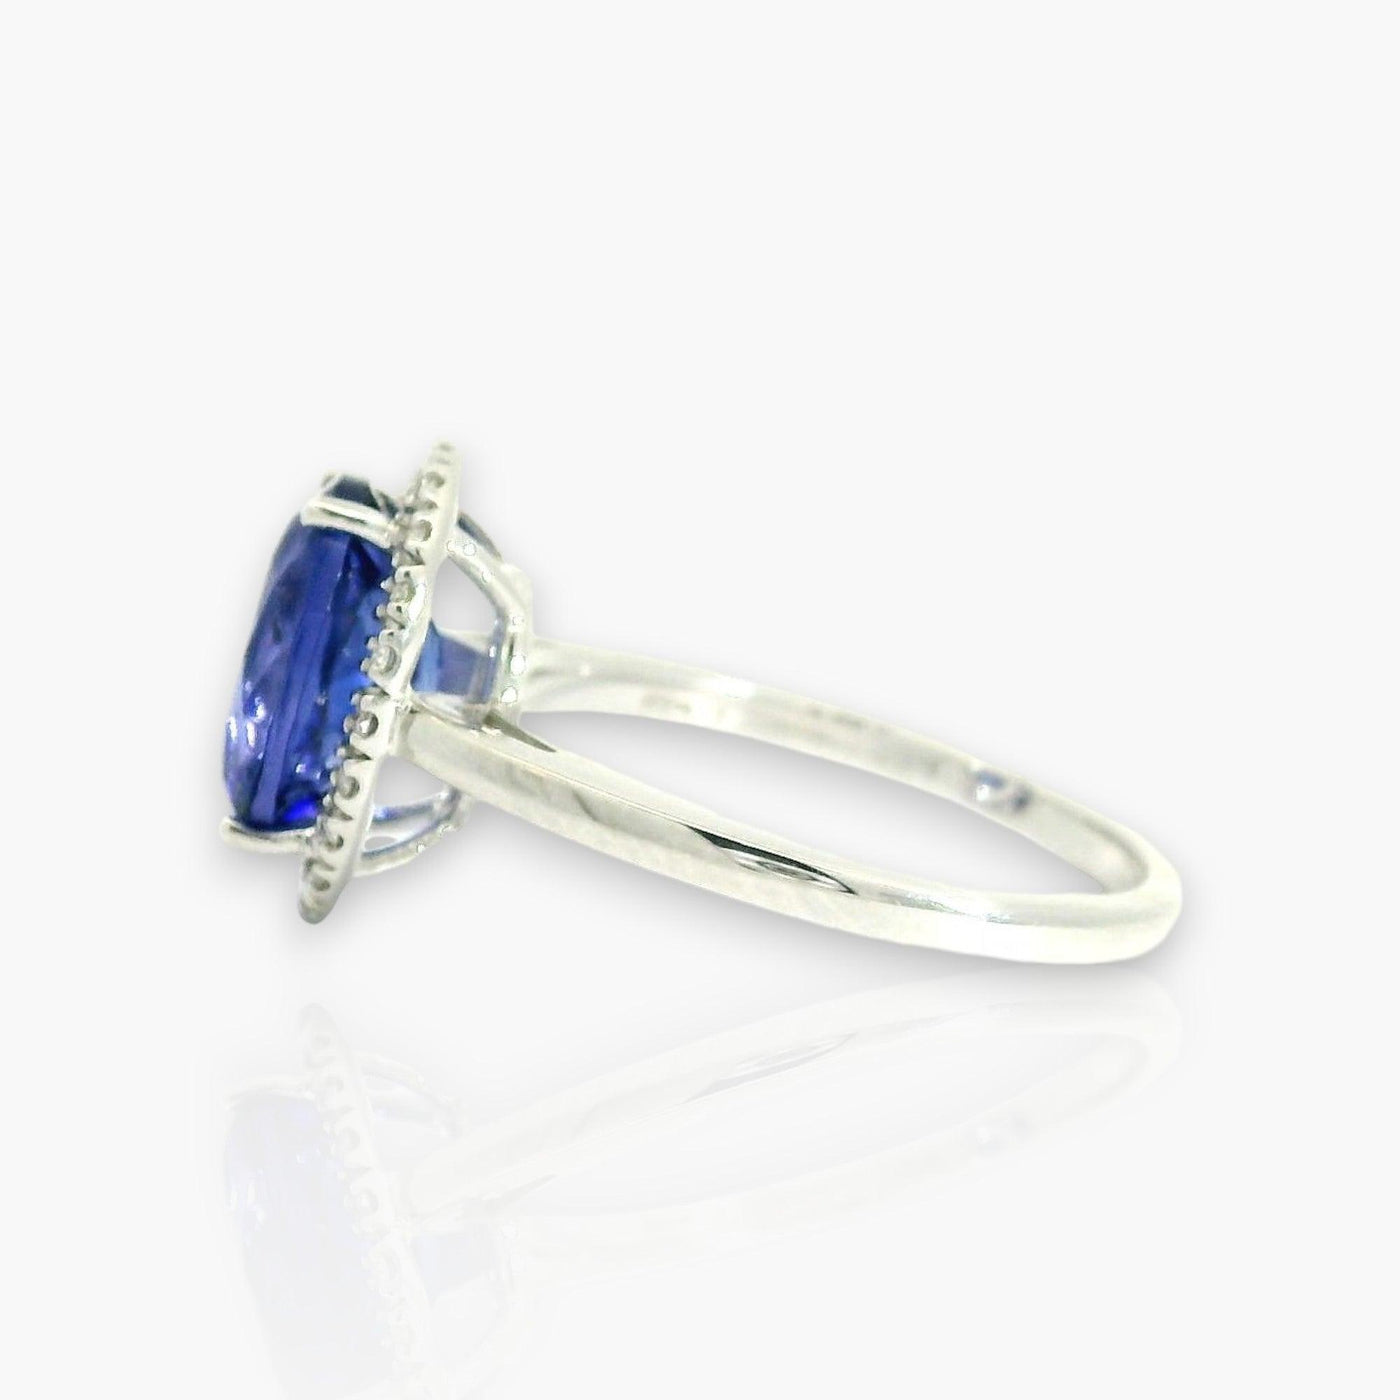 Oval blue Tanzanite Ring with Diamonds - Moregola Fine Jewelry